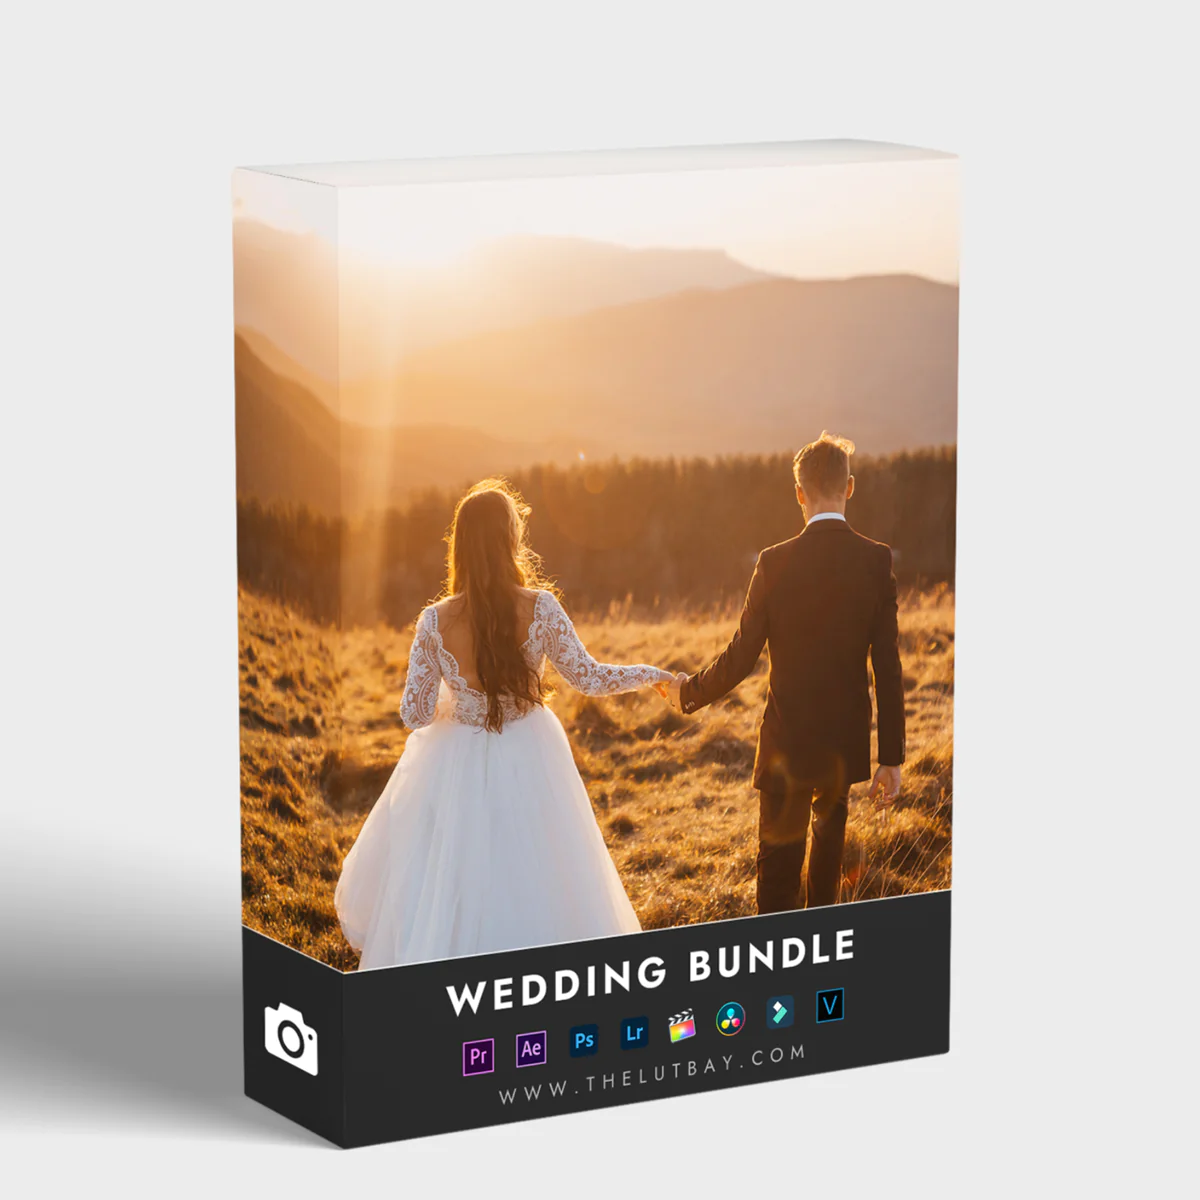 TheLutbay – WEDDING BUNDLE 婚礼套装luts包